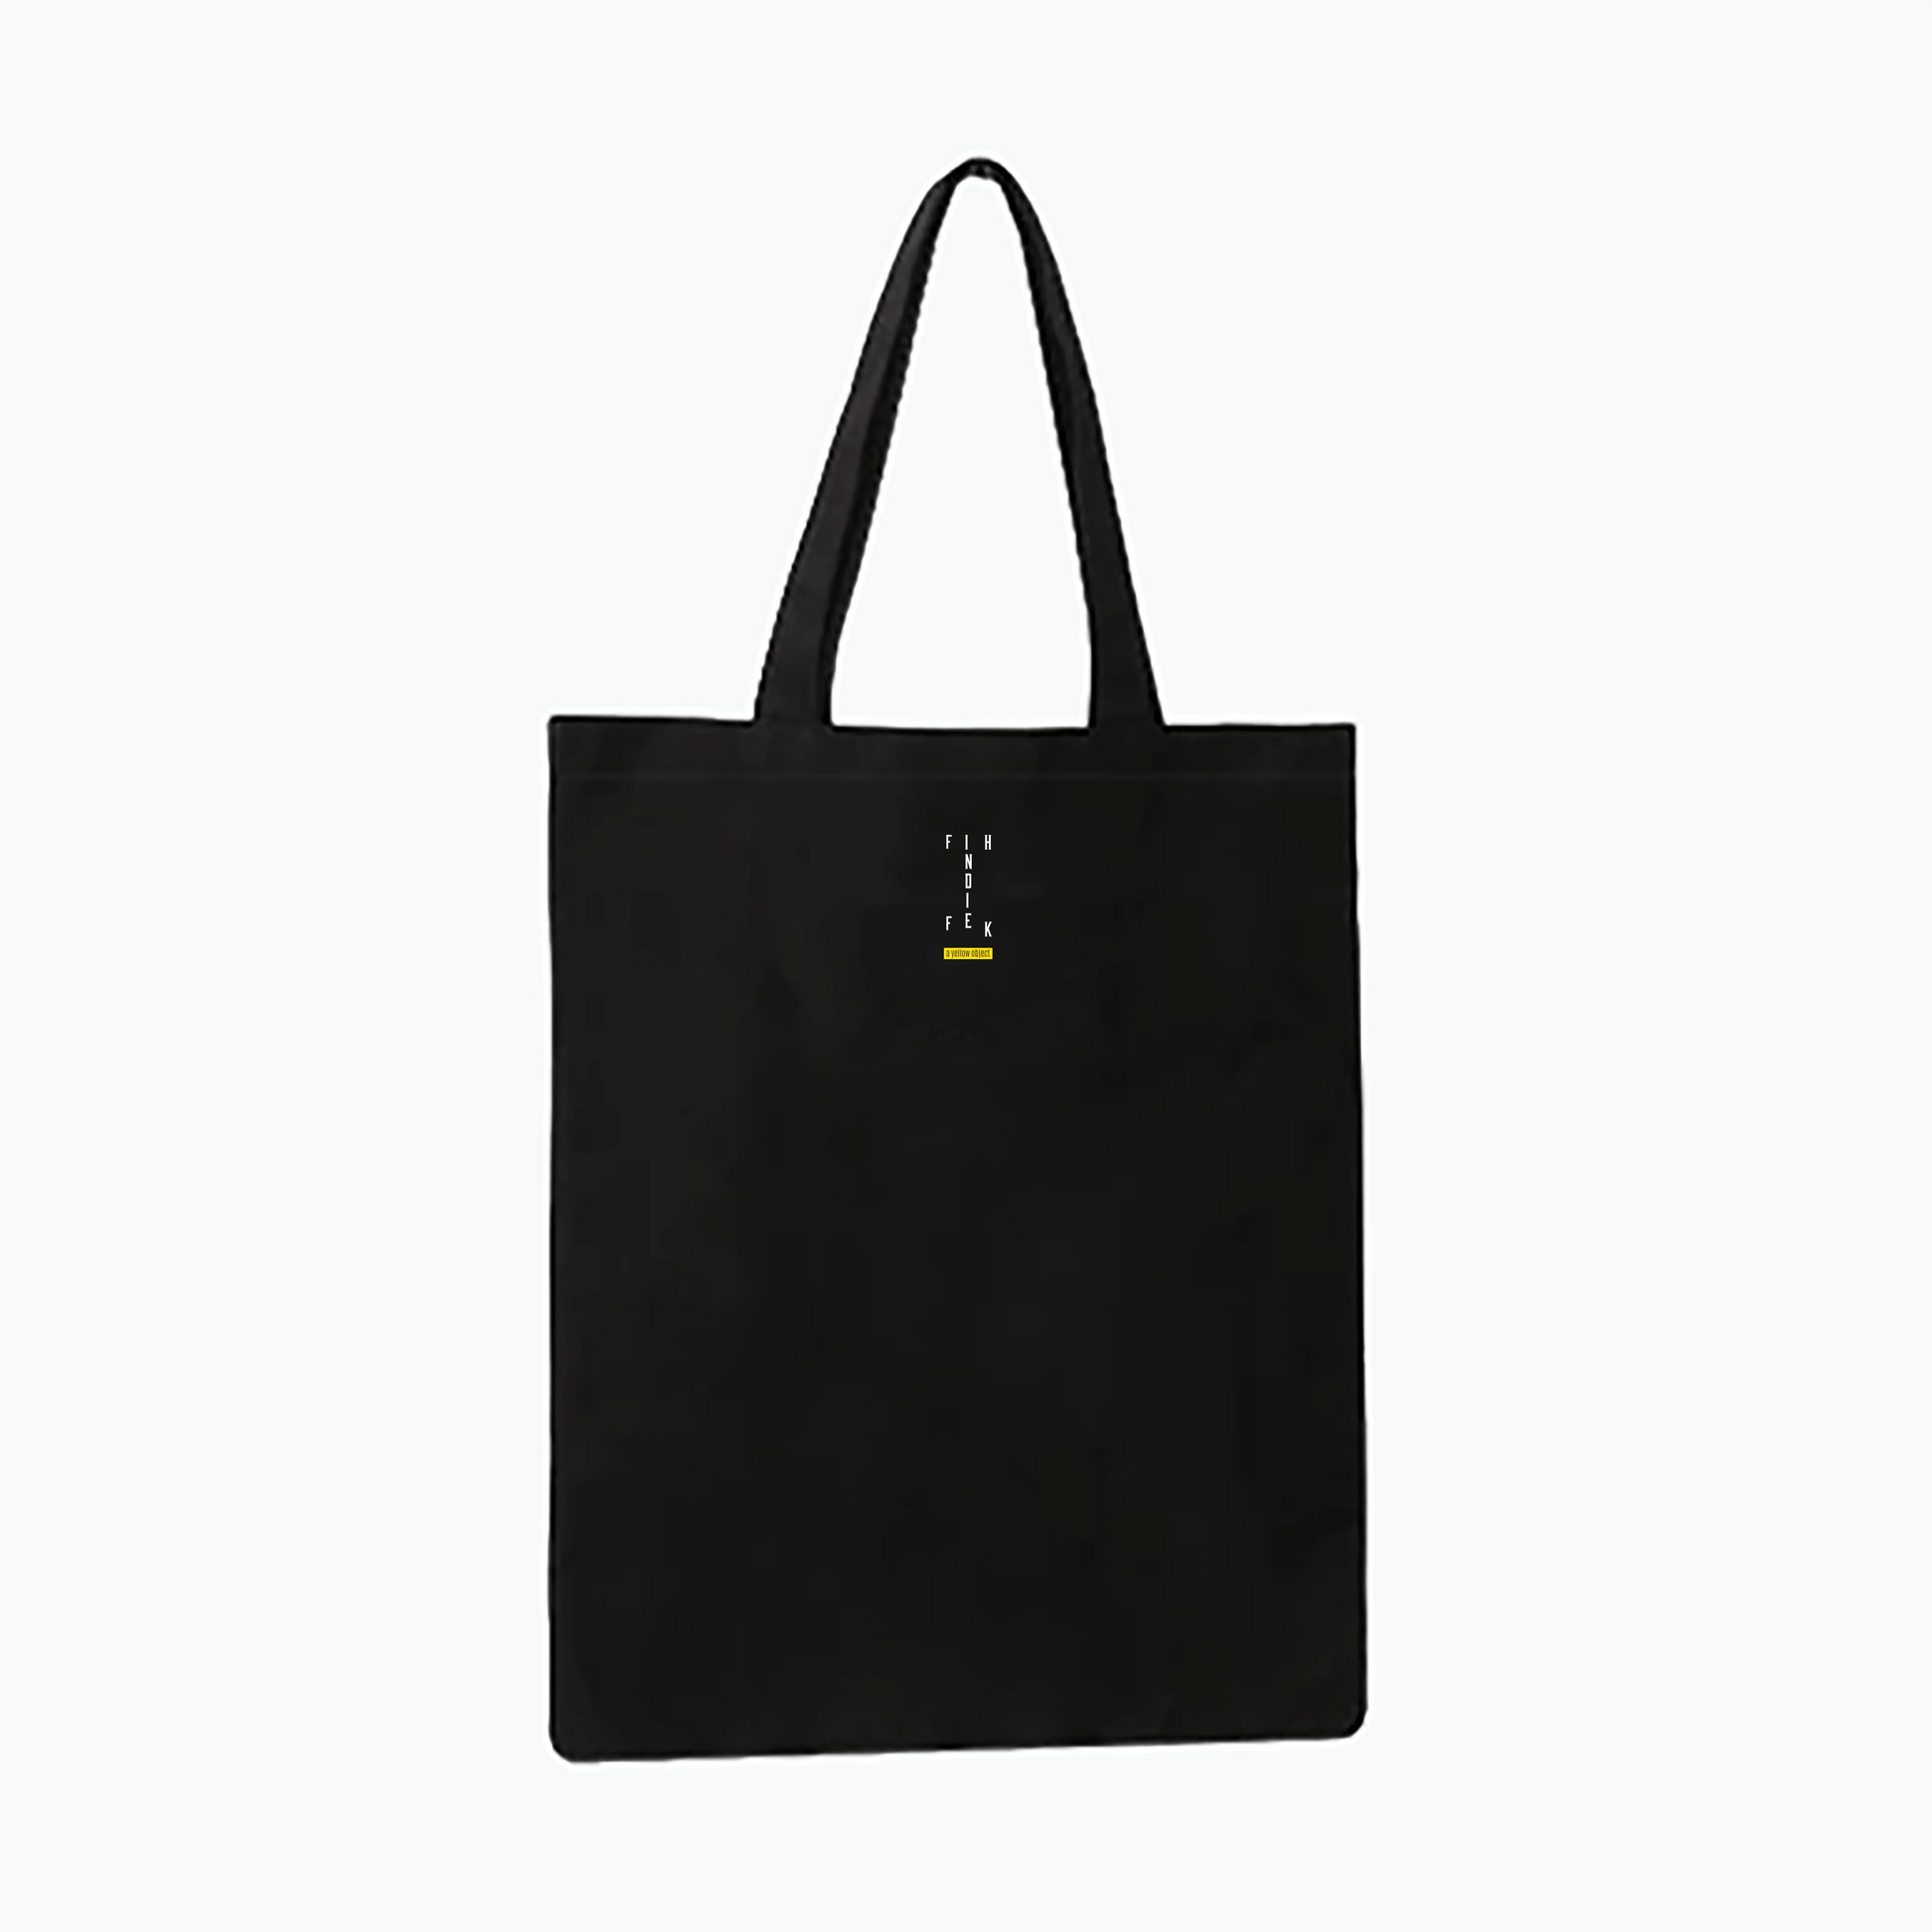 HKINDIEFF AYO Tote Bag (Black) - A Yellow Object